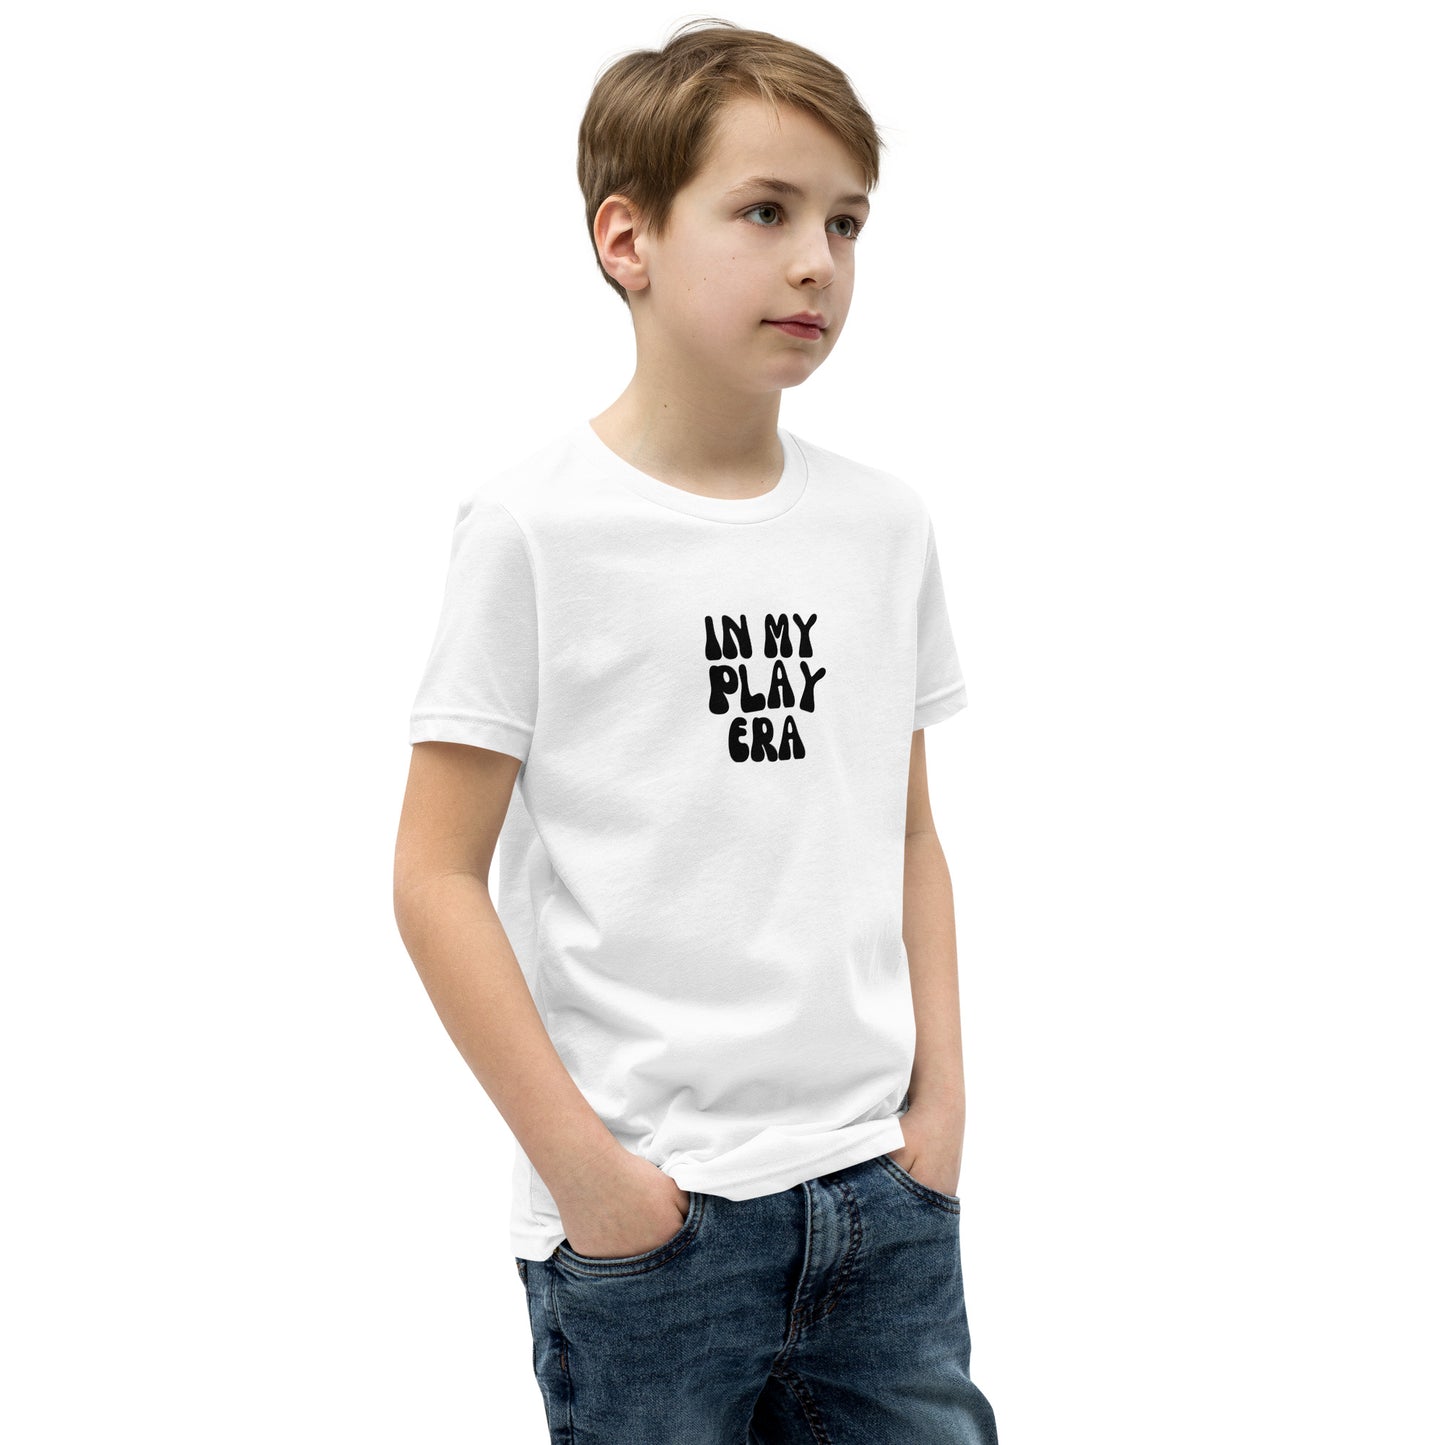 Kids 'In My Play Era' Short Sleeve T-Shirt